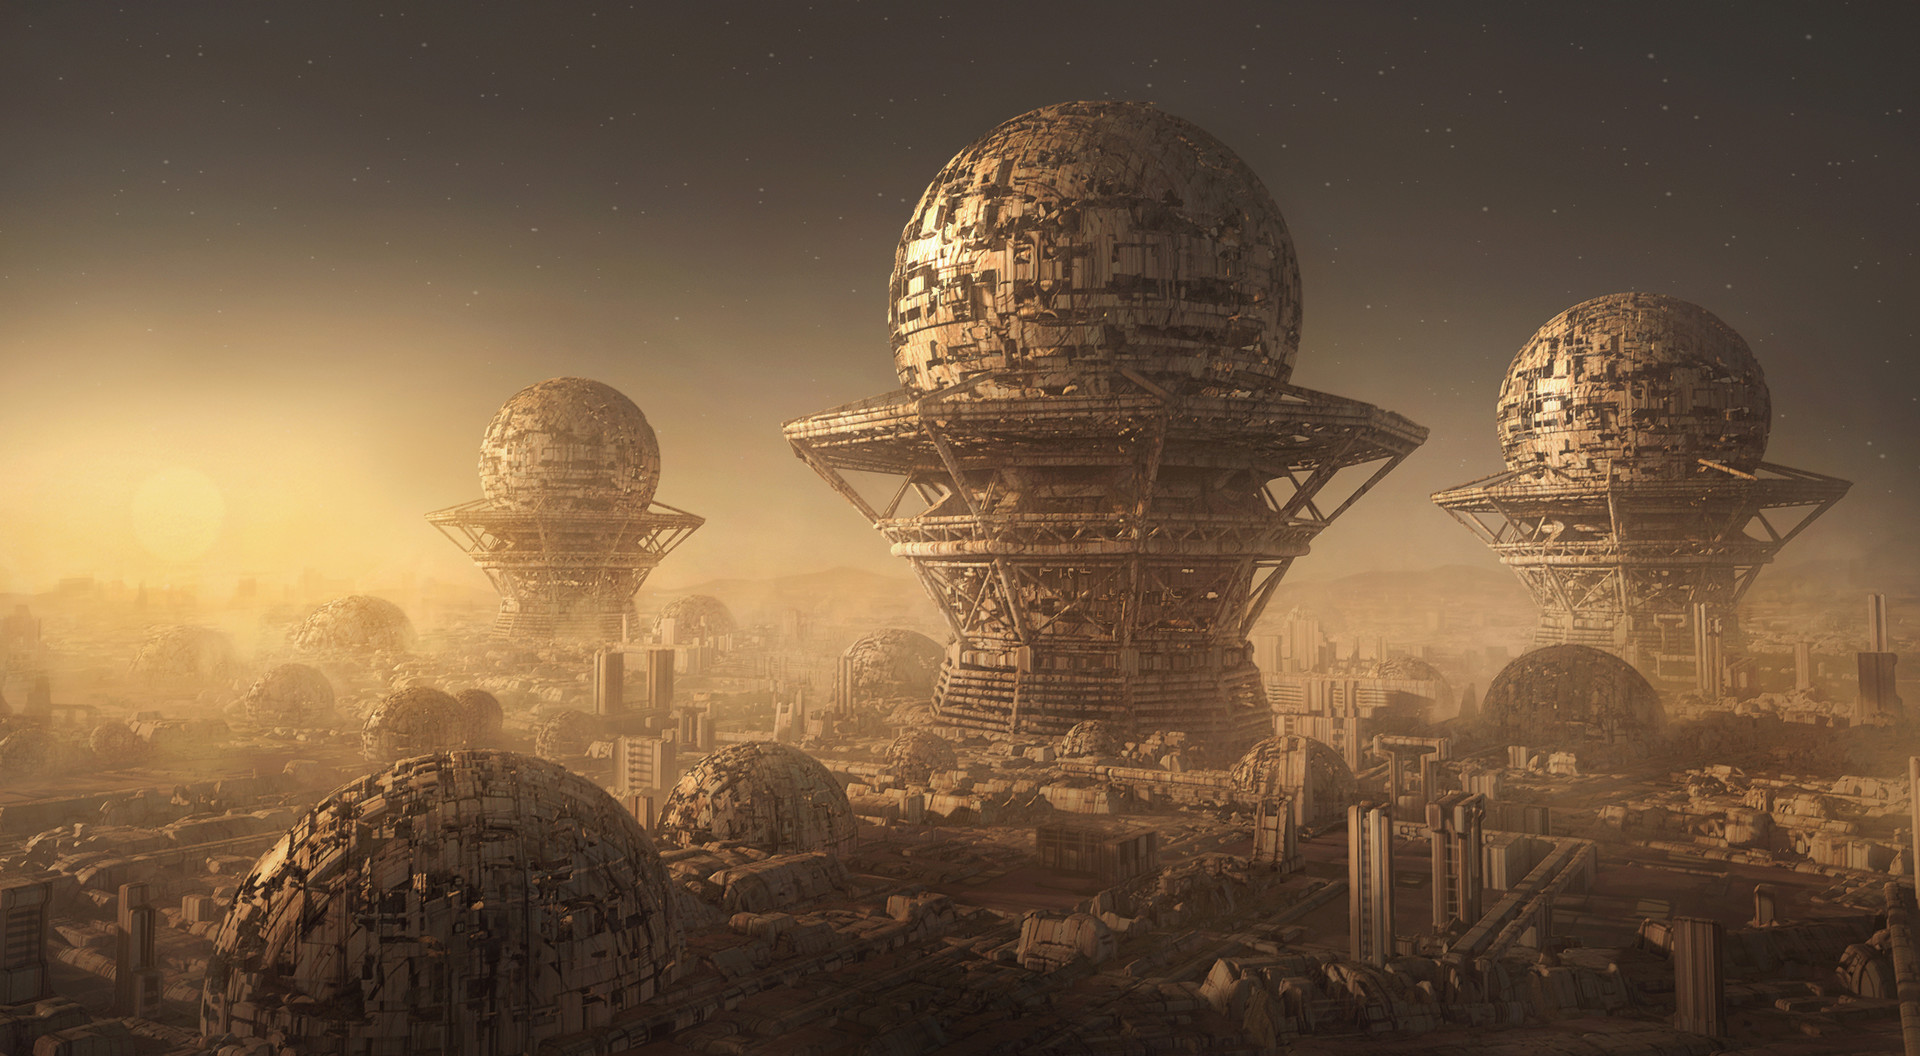 ArtStation - Alien city